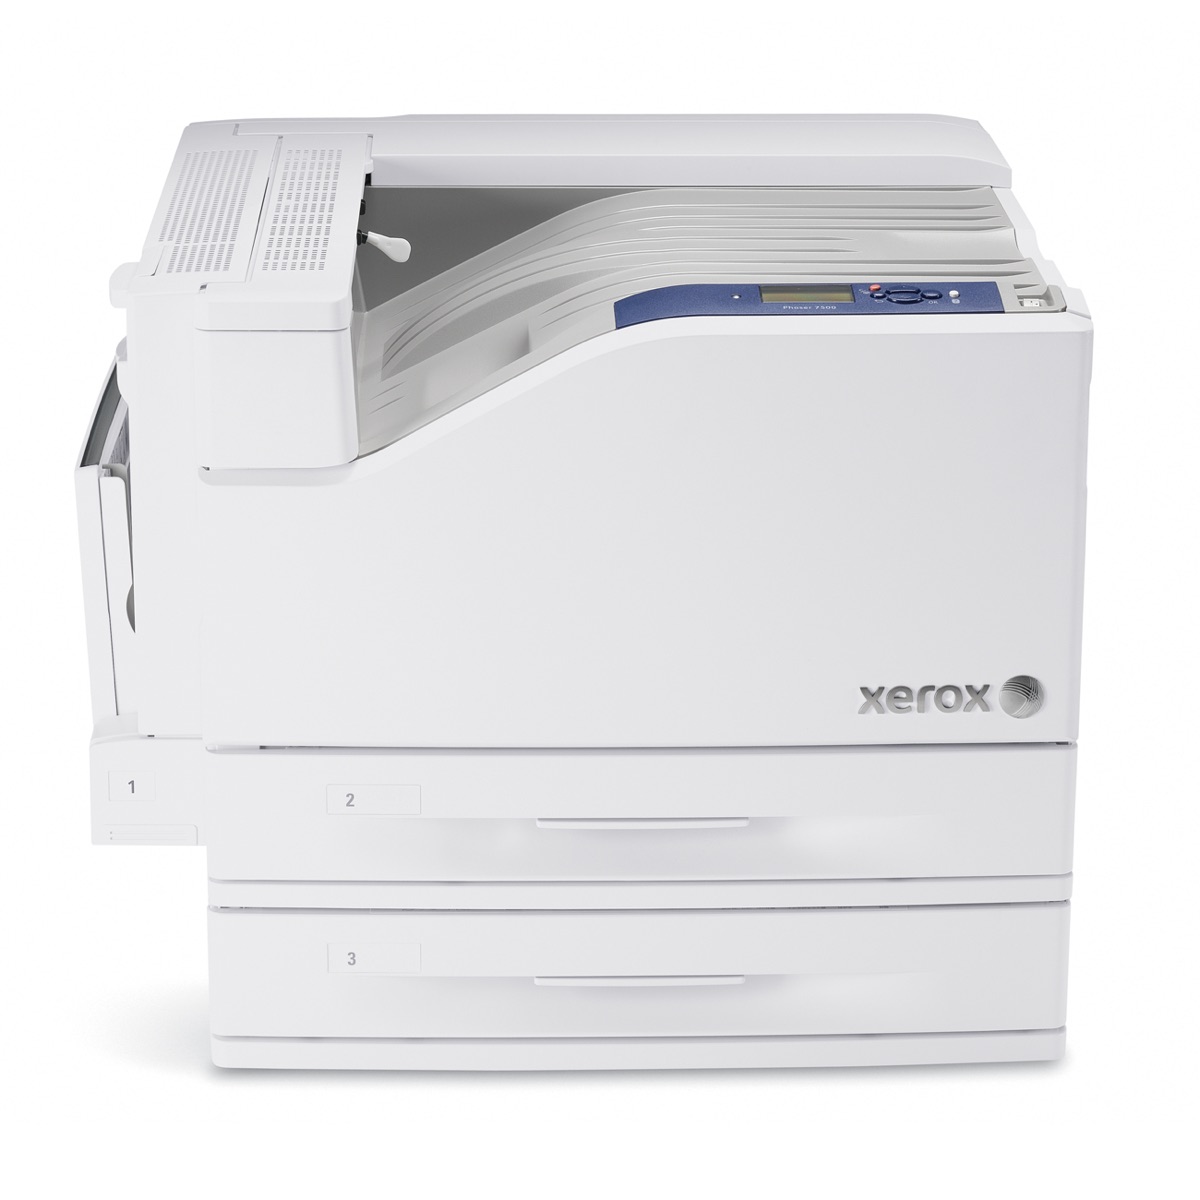 Xerox Printers:  The Xerox Phaser 7500DT Printer